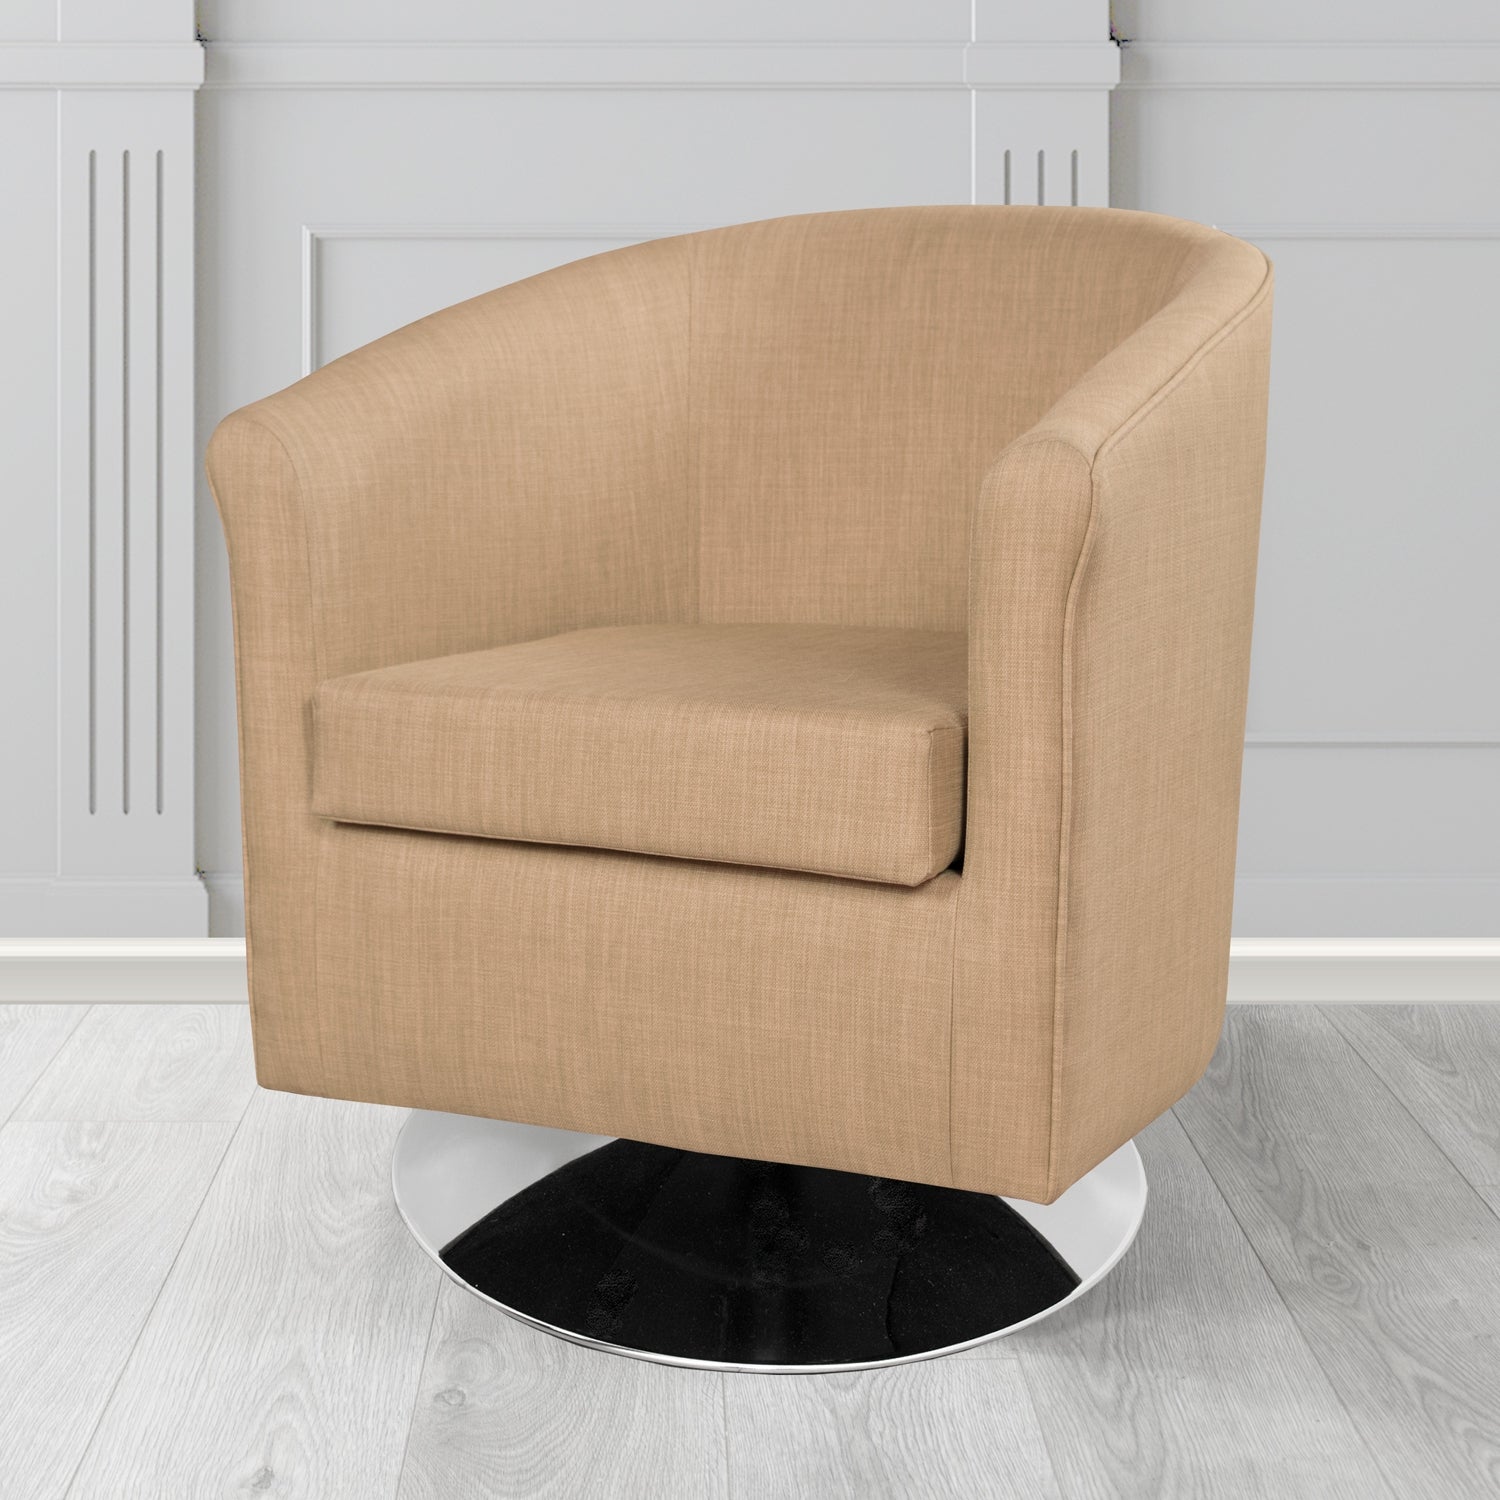 Tuscany Charles Honey Plain Linen Fabric Swivel Tub Chair - The Tub Chair Shop